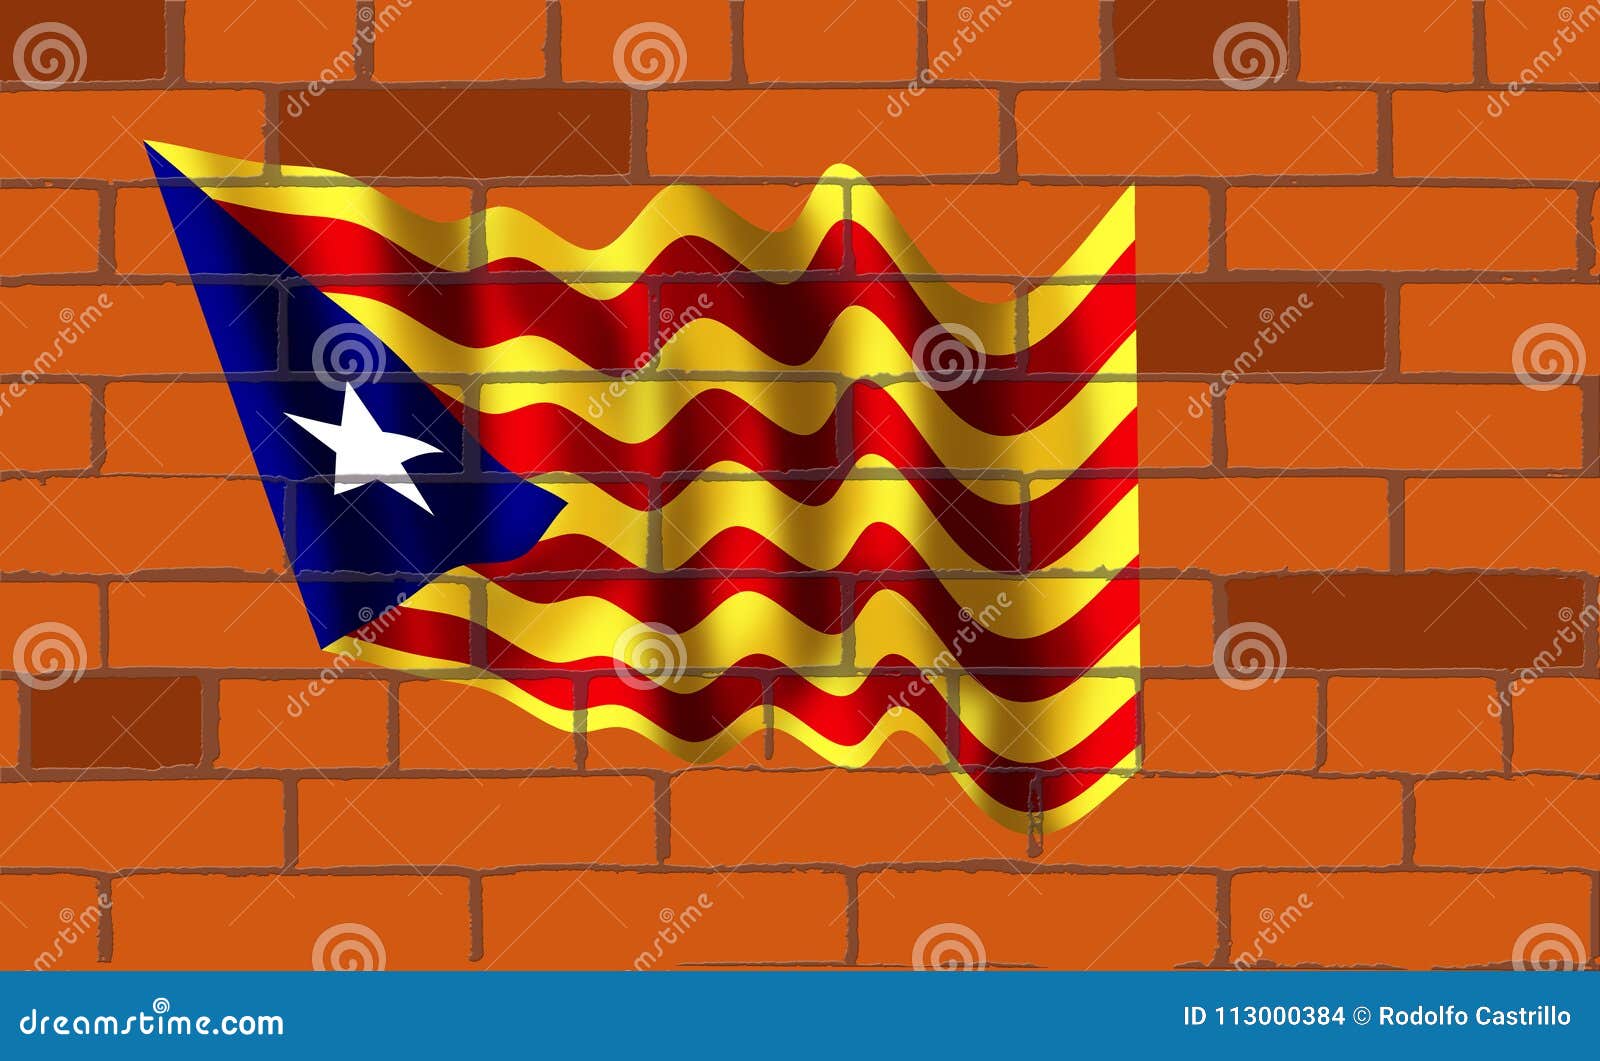 the catalunya flag on wall of bricks